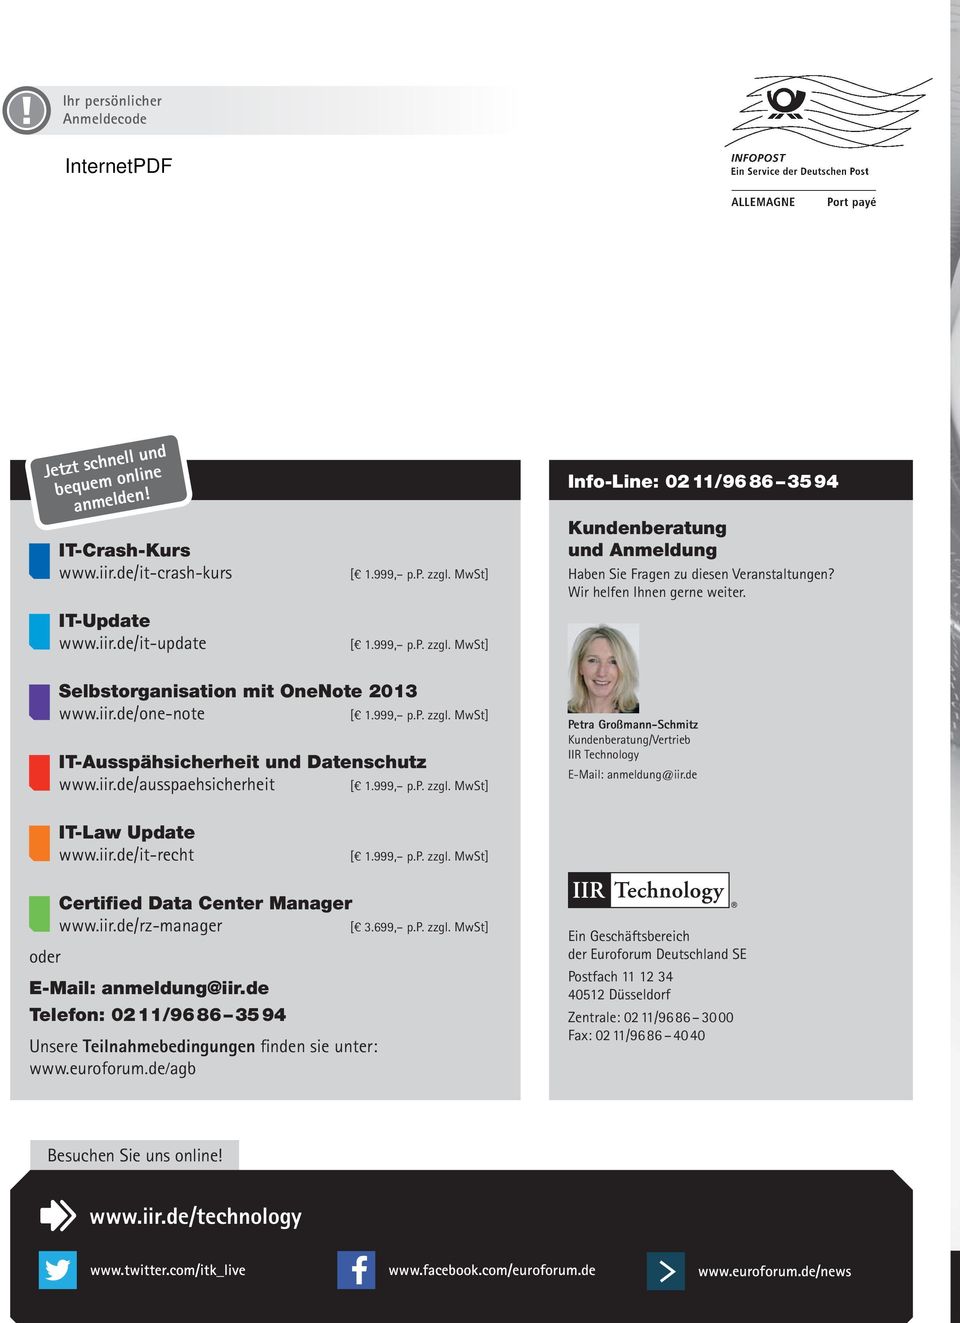 Selbstorganisation mit OneNote 2013 www.iir.de/one-note [] IT-Ausspähsicherheit und Datenschutz www.iir.de/ausspaehsicherheit [] Petra Großmann-Schmitz Kundenberatung/Vertrieb IIR Technology E-Mail: anmeldung@iir.